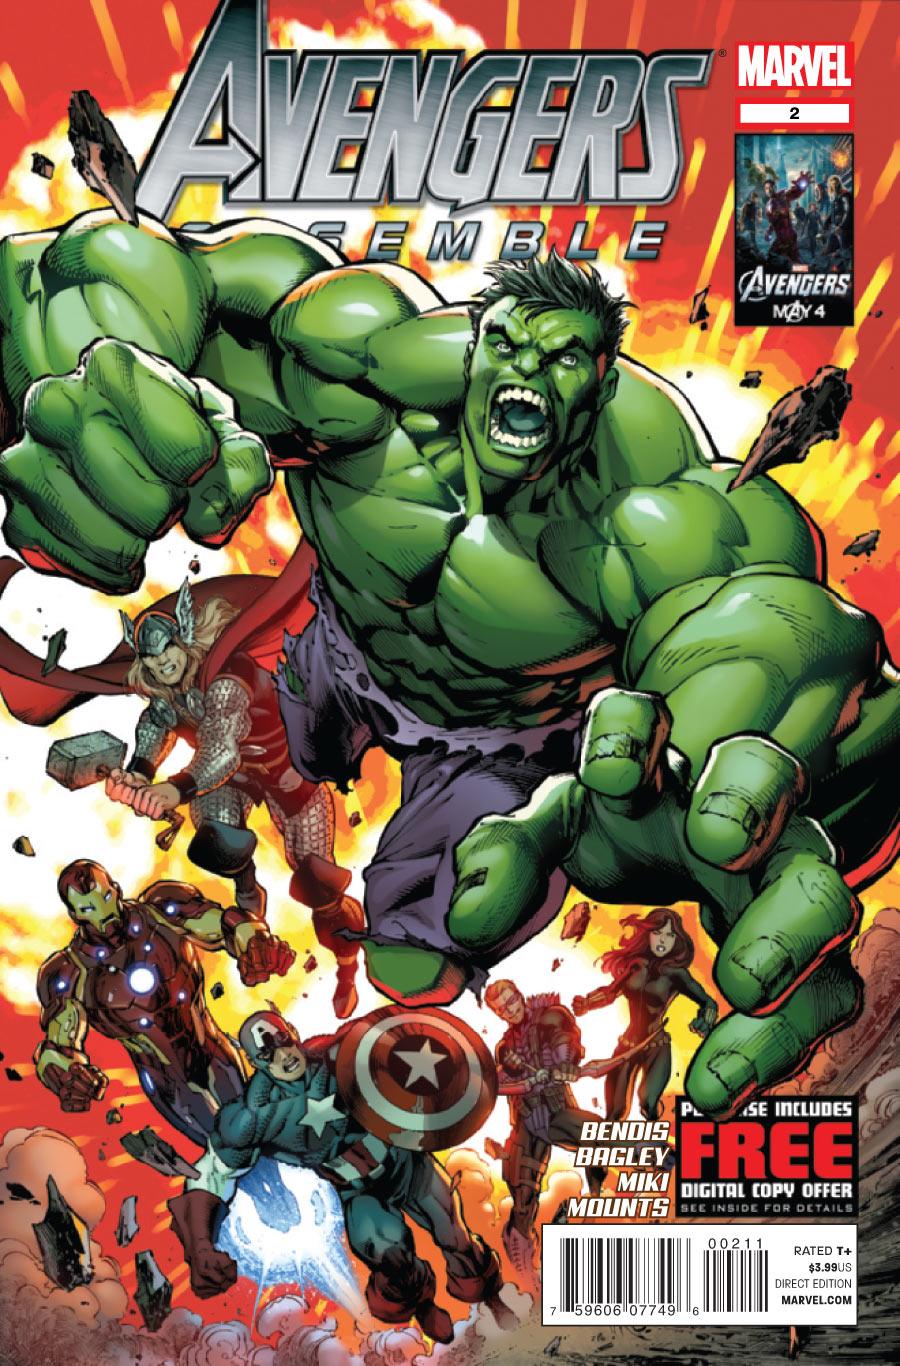 Avengers Assemble Vol. 2 #2